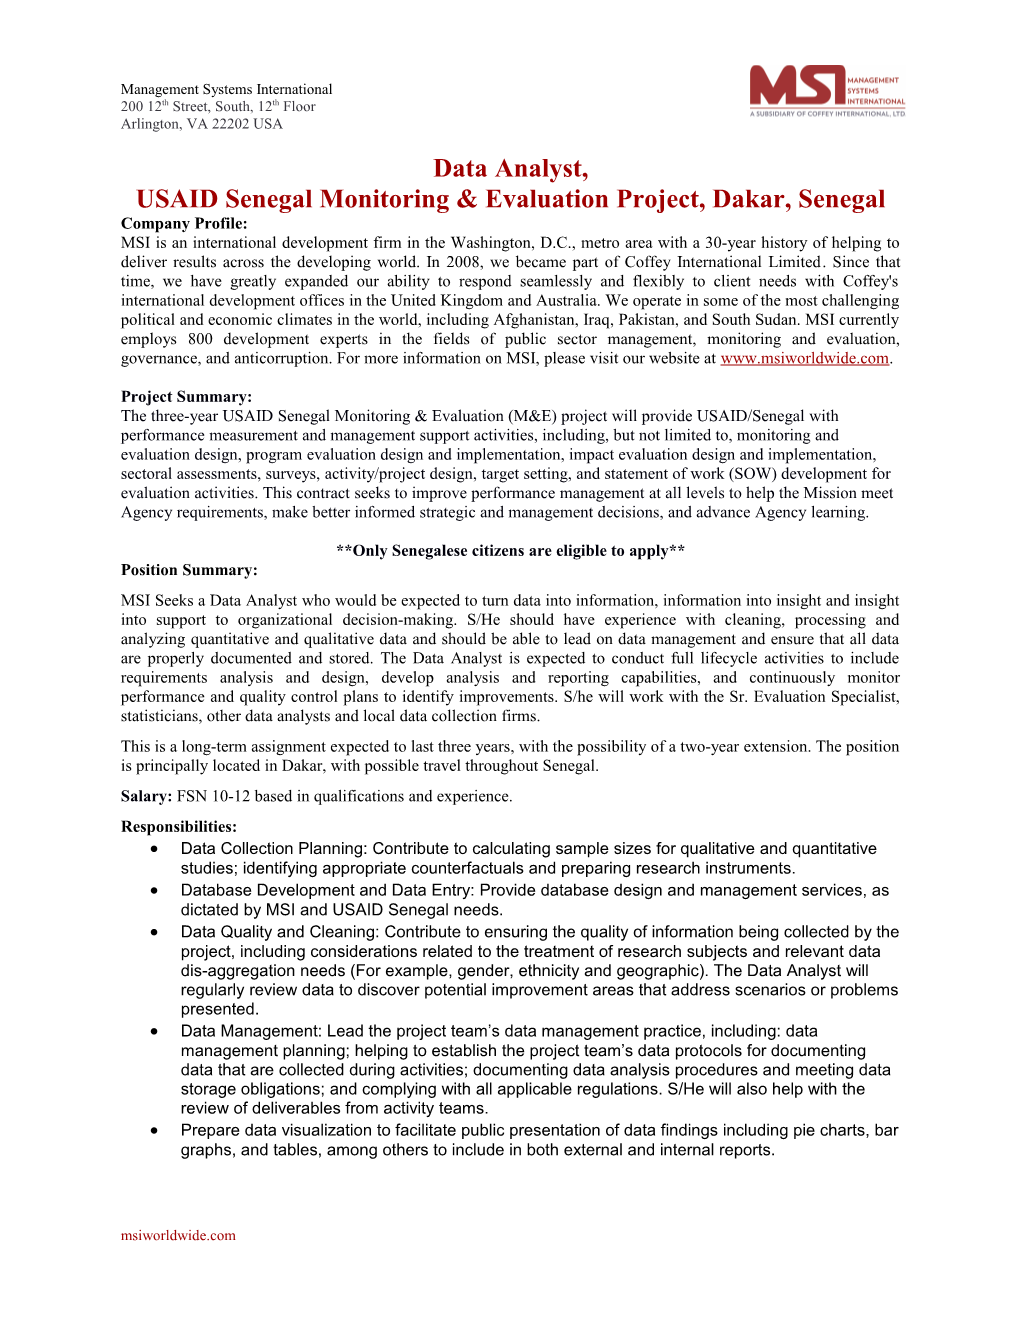 USAID Senegal Monitoring & Evaluation Project, Dakar, Senegal